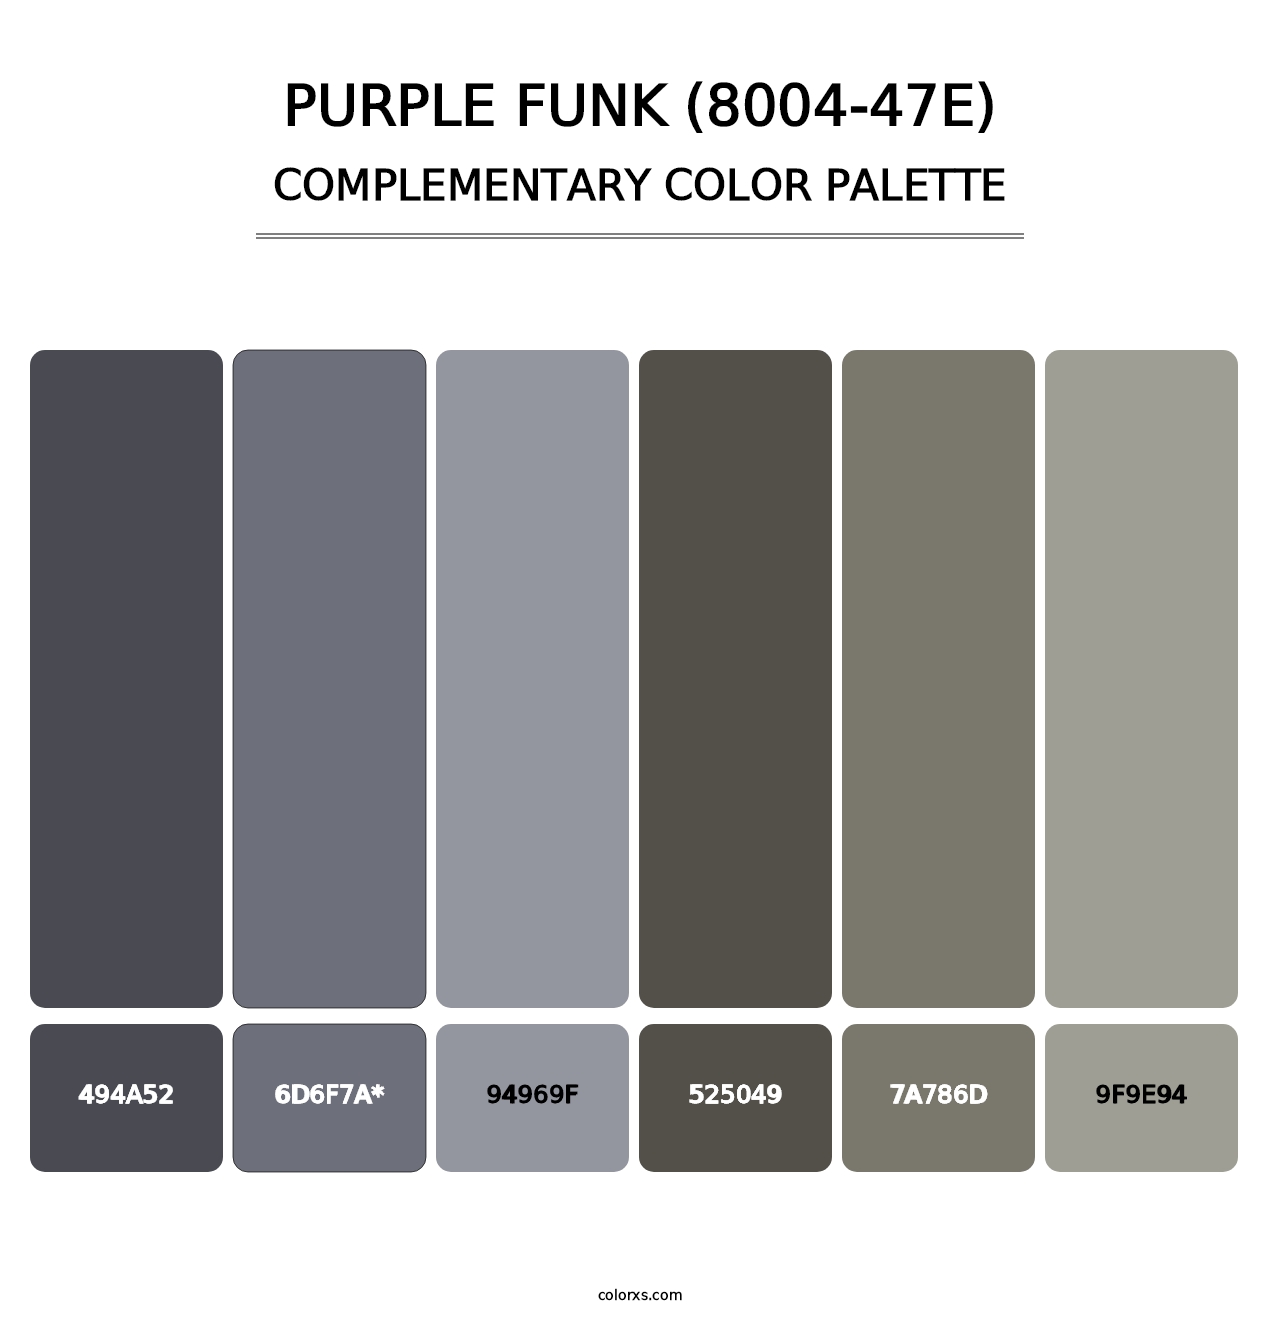 Purple Funk (8004-47E) - Complementary Color Palette